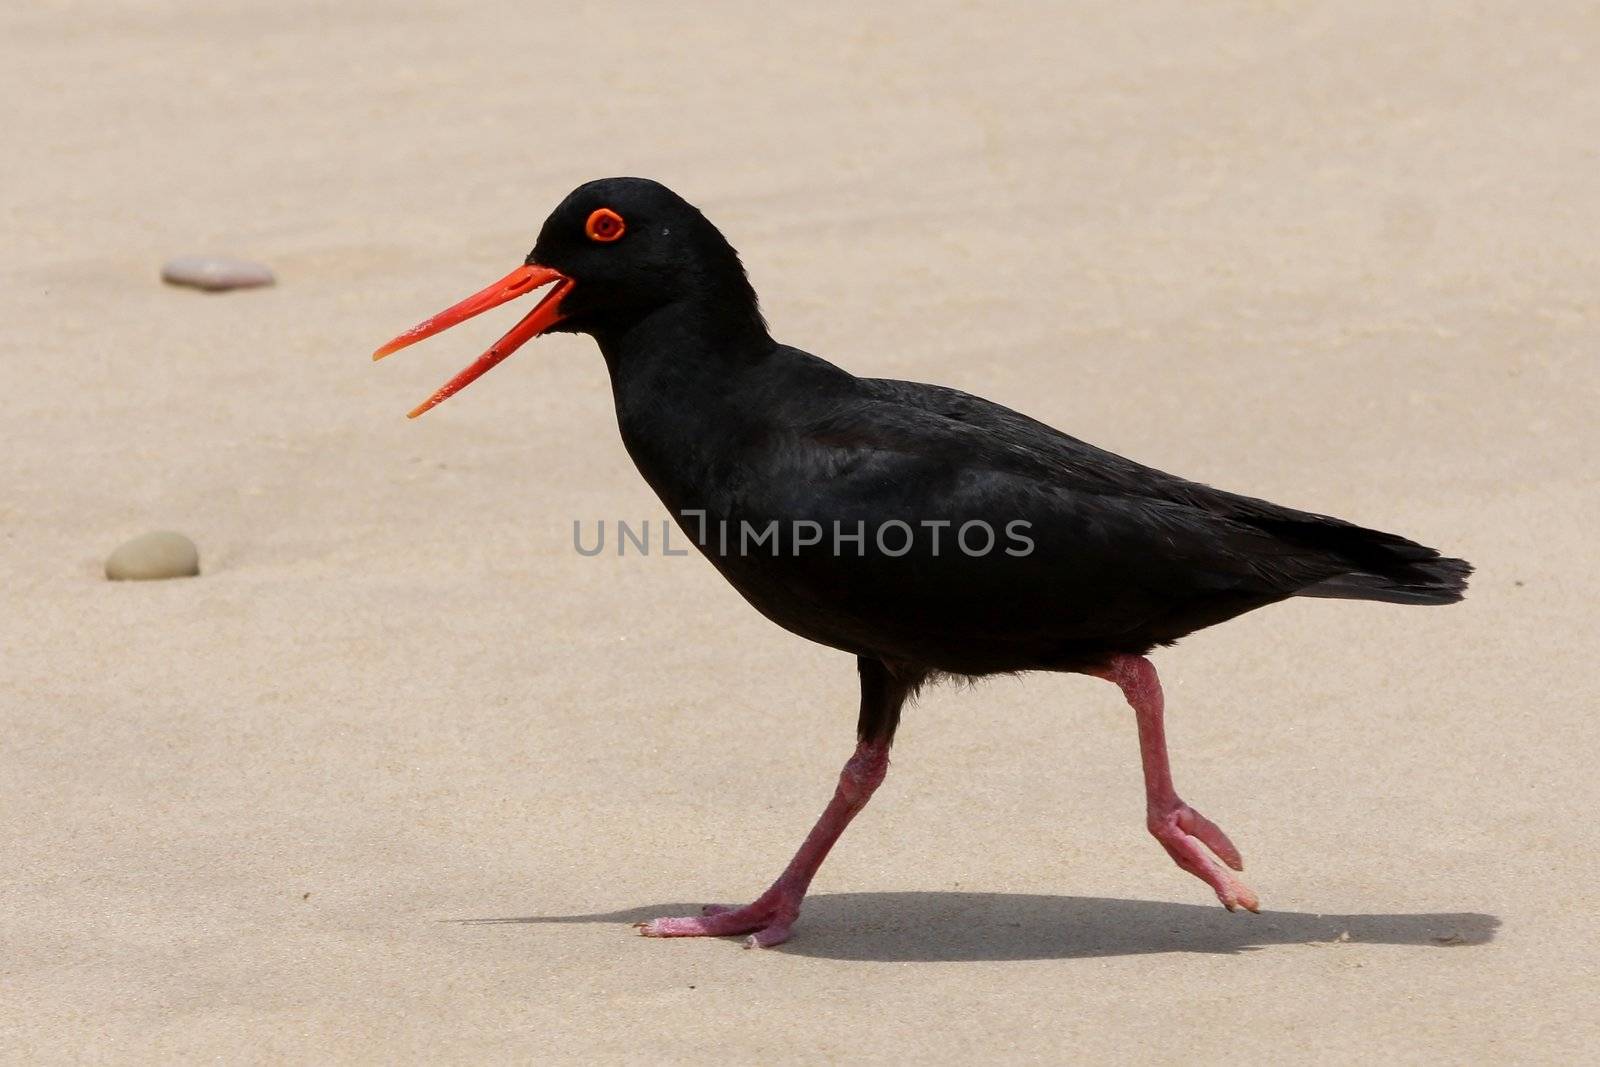 Striking black and orange oystercatcher bird running across sand